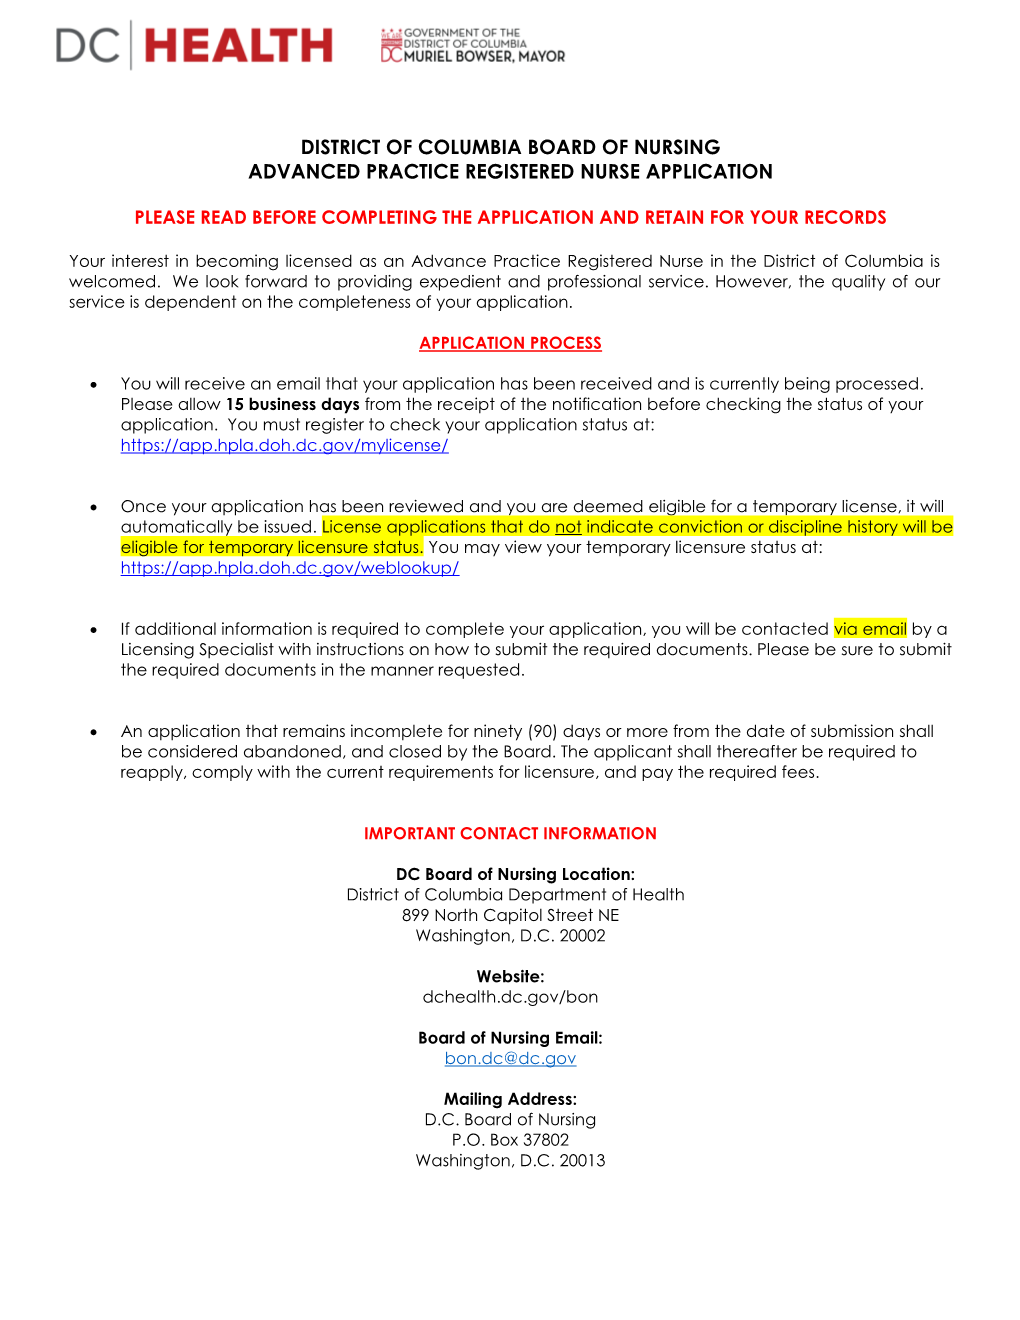 District of Columbia Board of Nursing Advanced Practice Registered Nurse Application